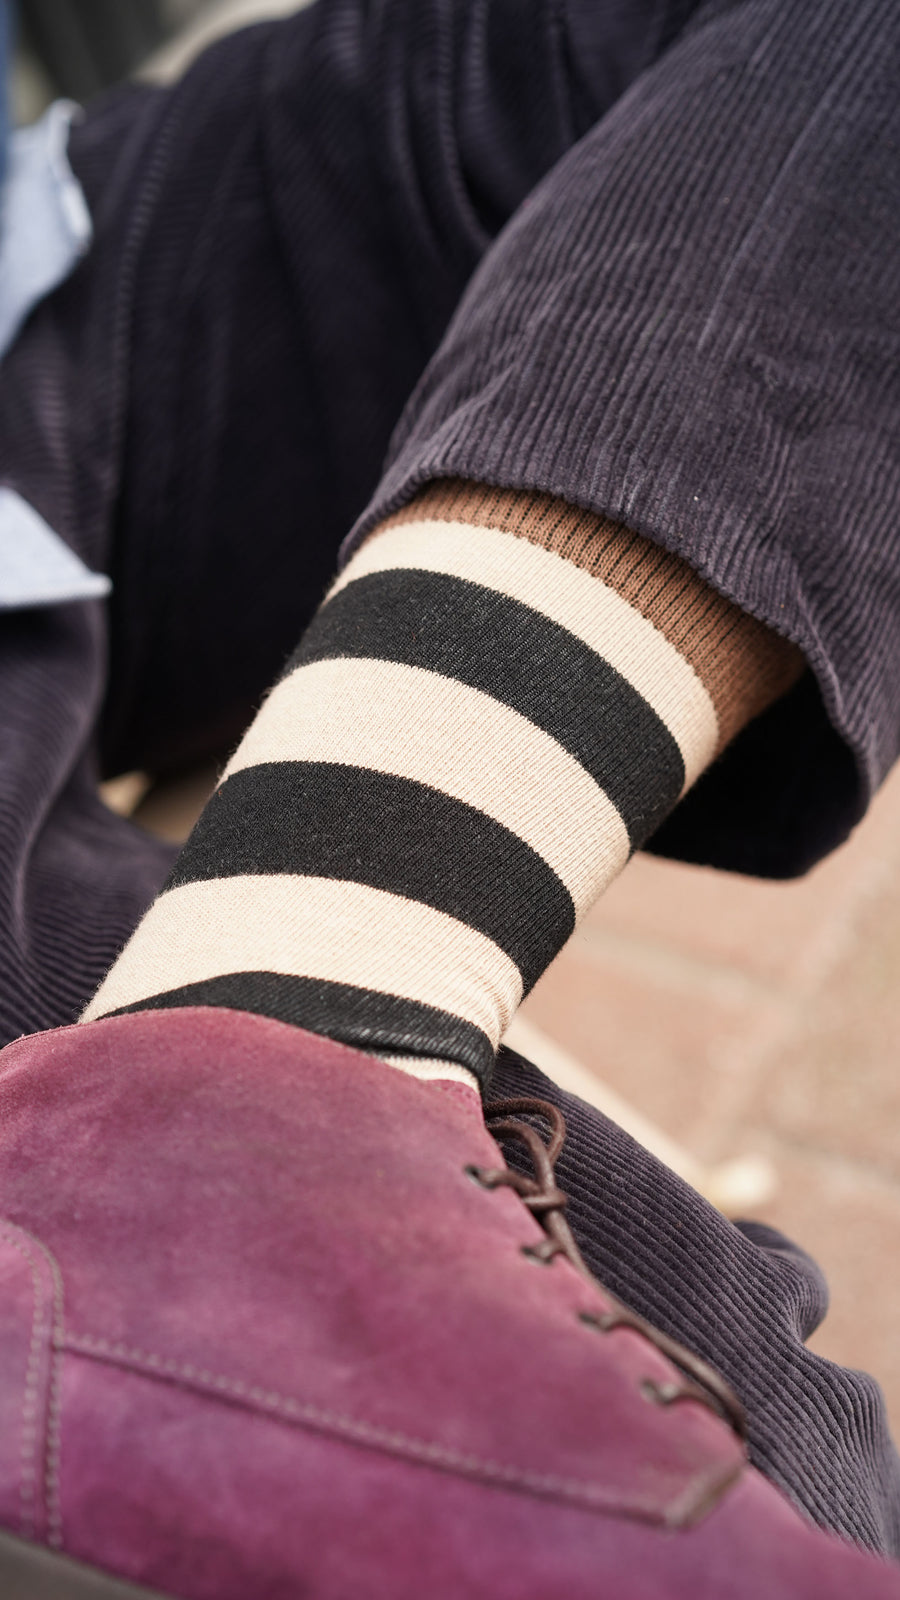 Men's Sand Stripped Socks black and brown